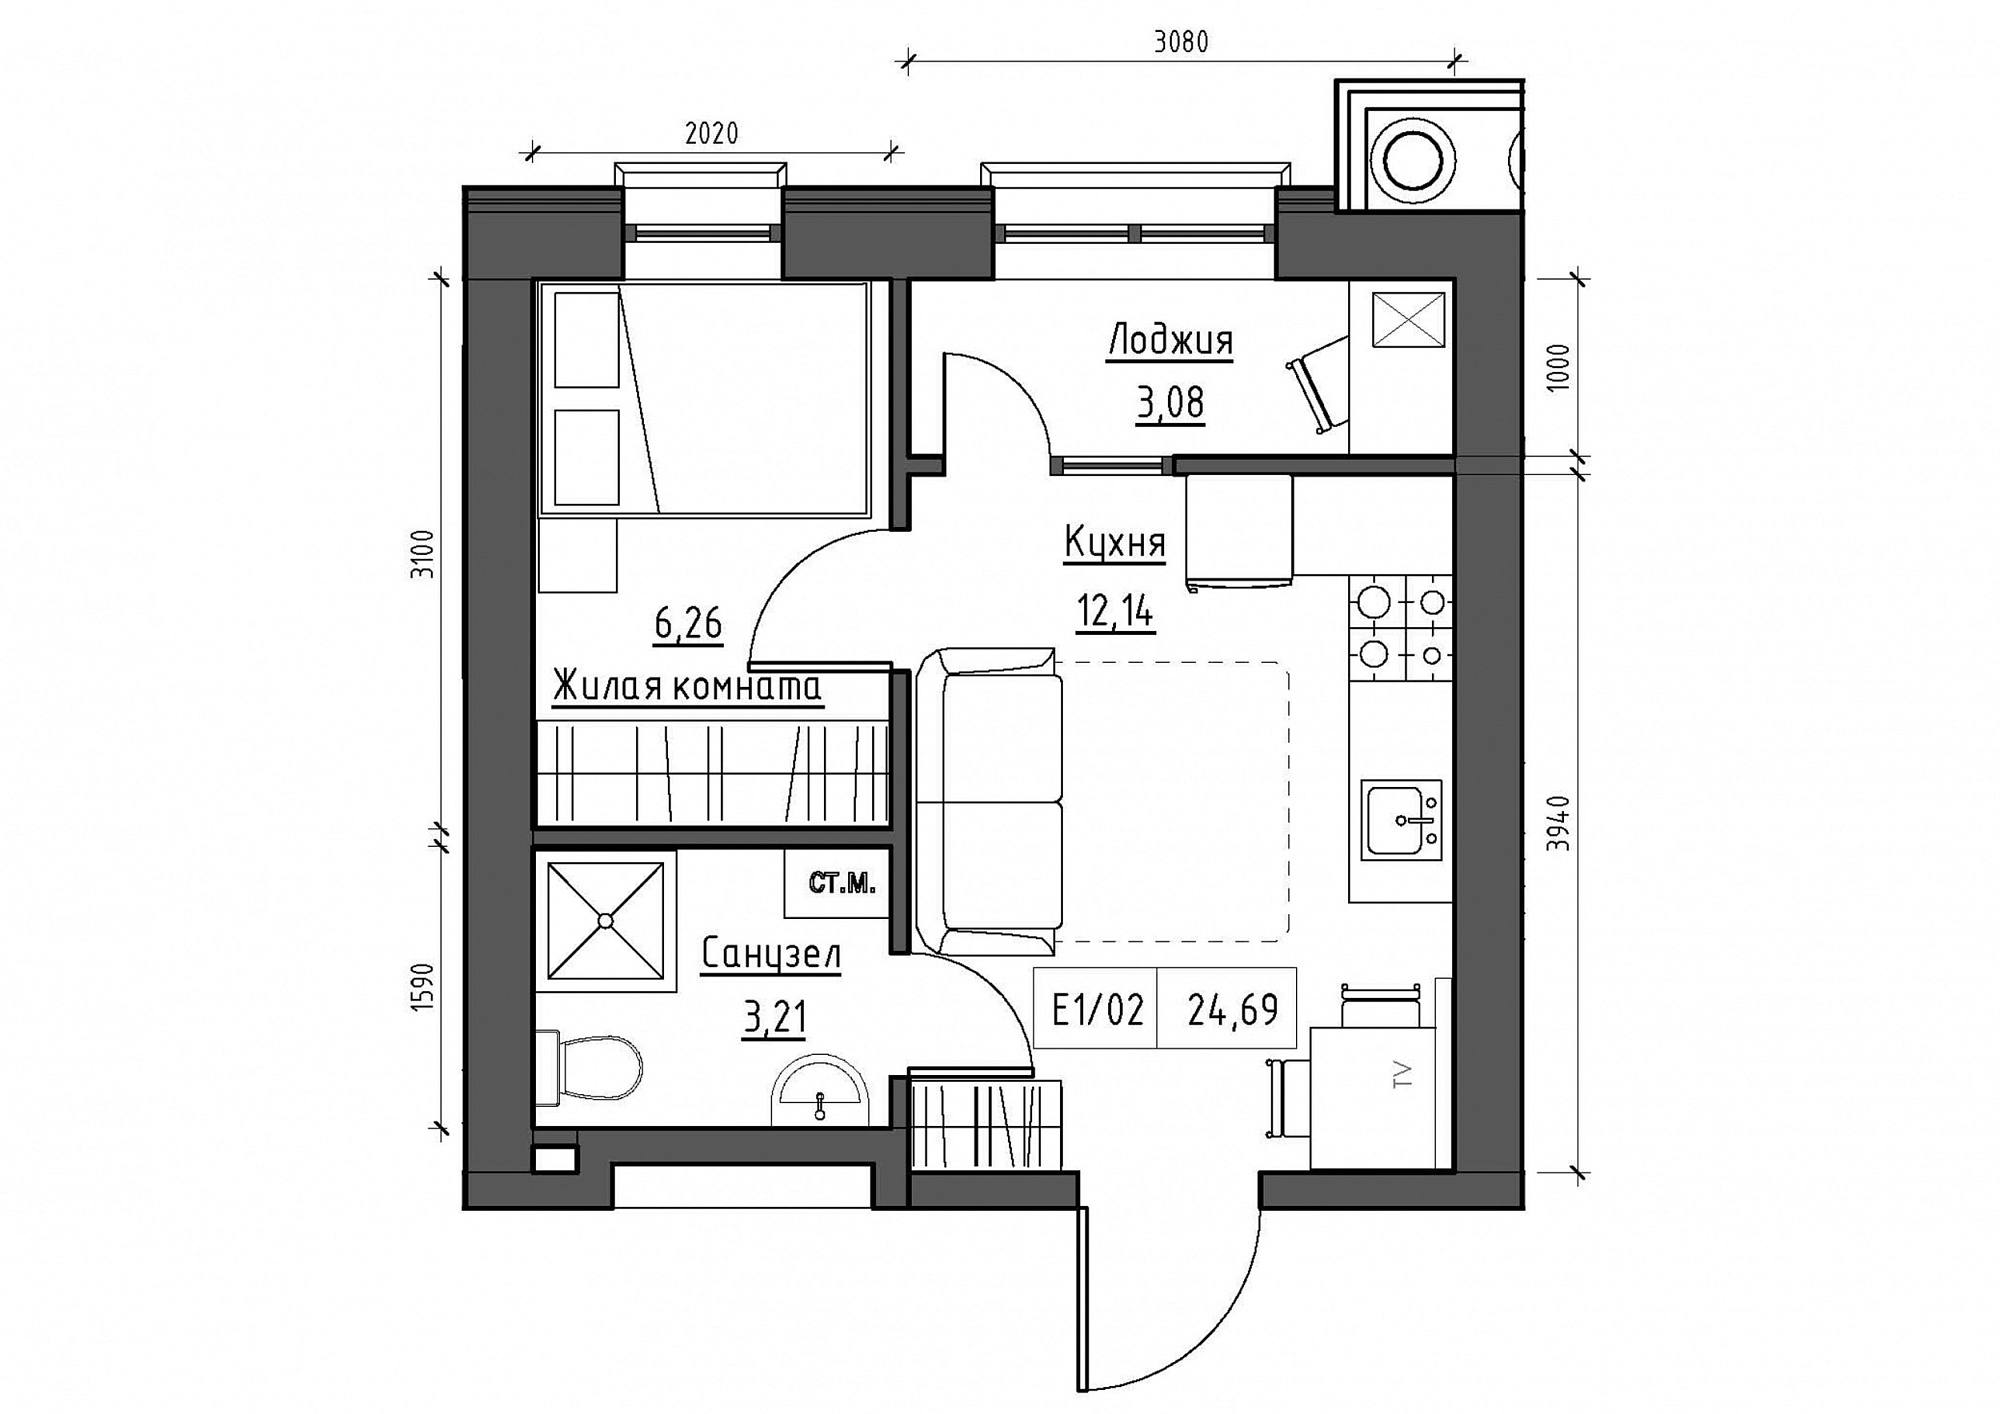 Planning 1-rm flats area 24.69m2, KS-011-04/0014.